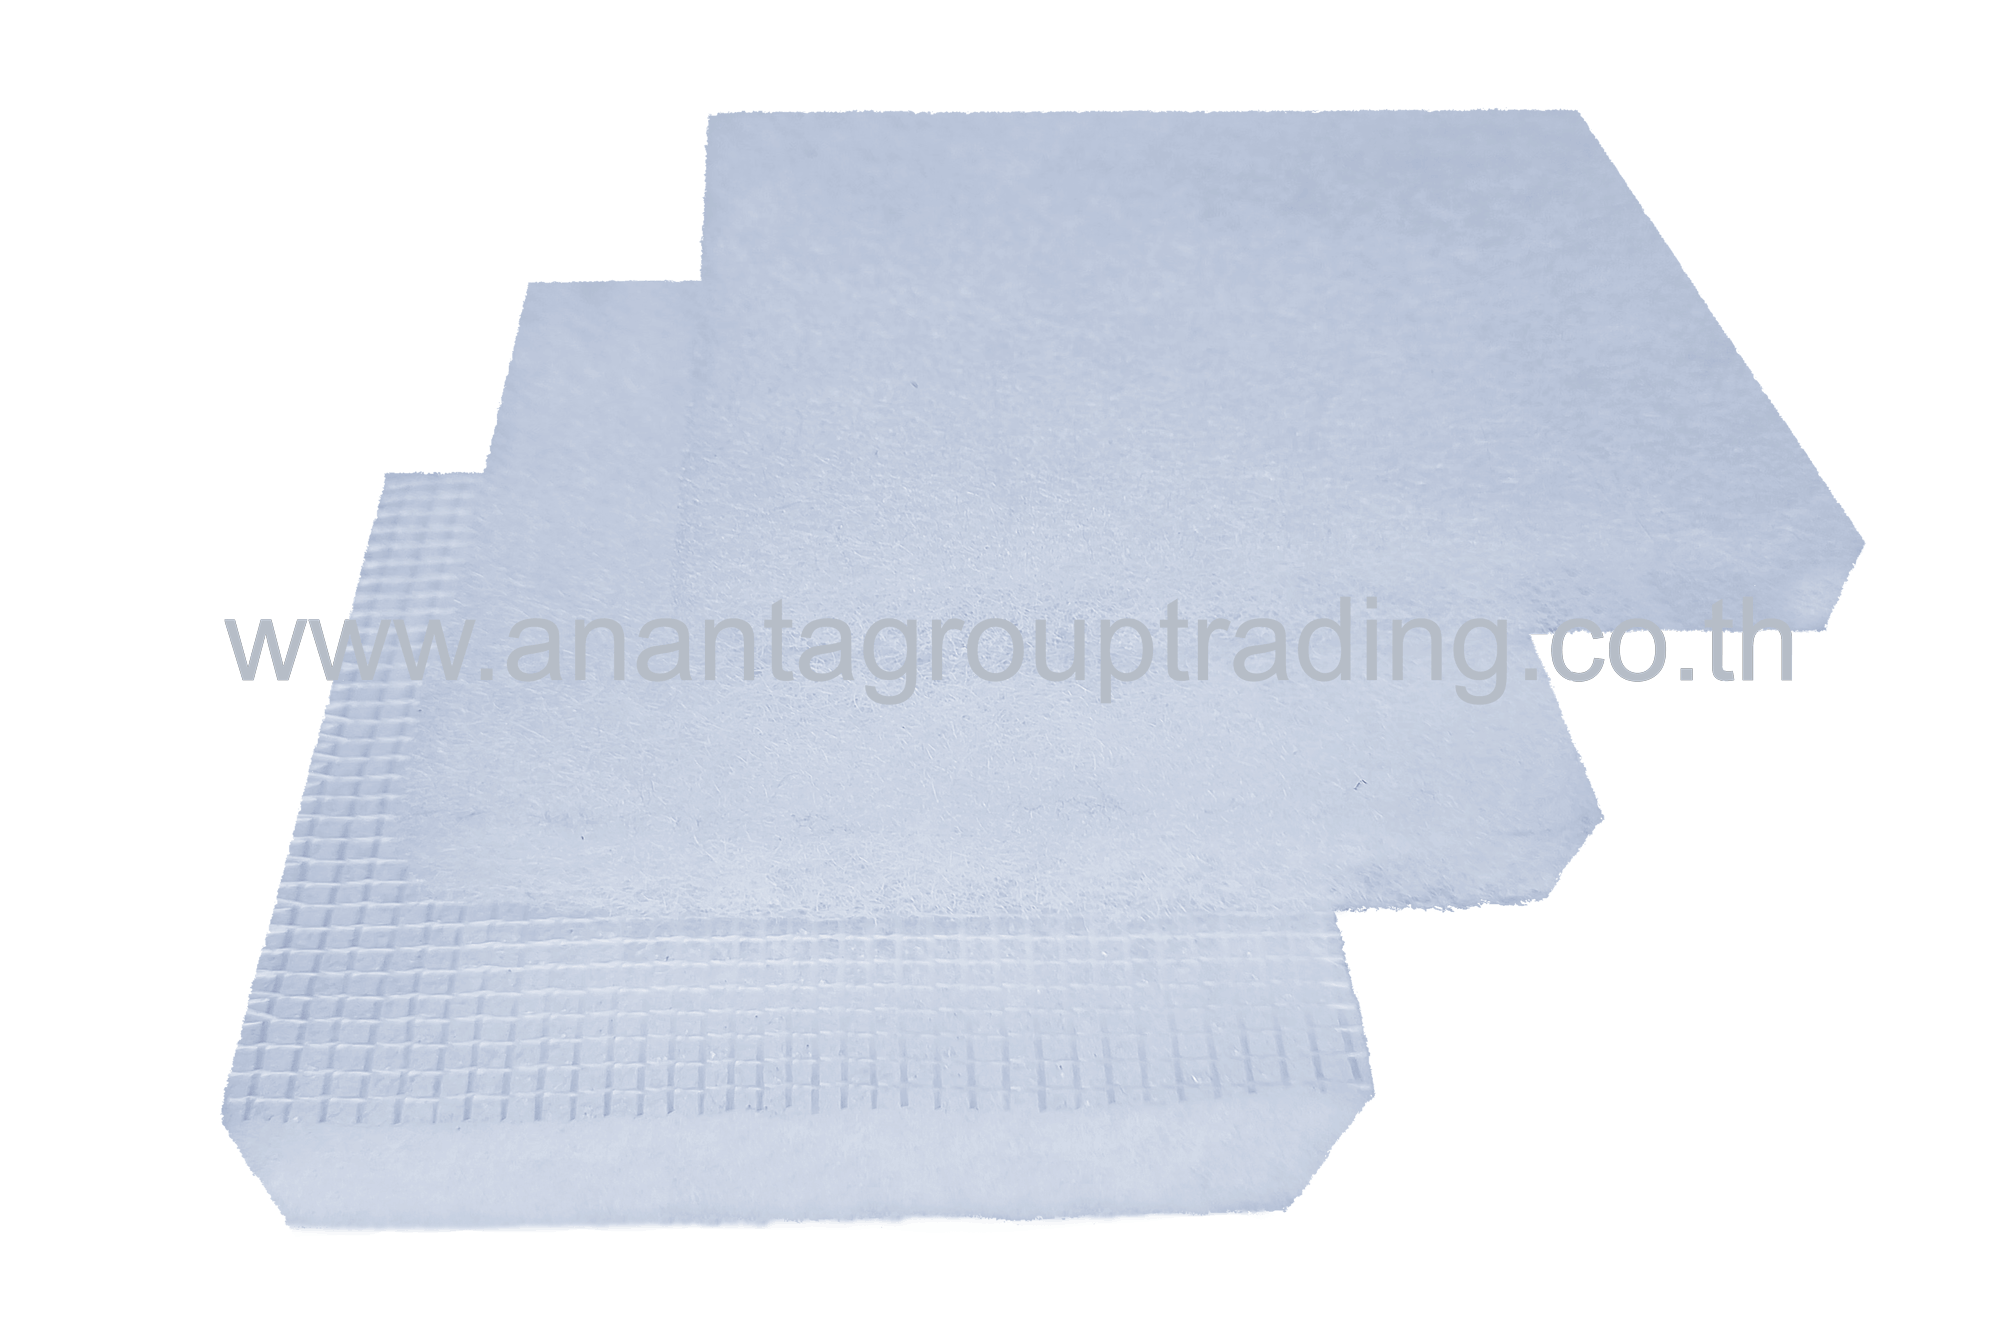 Polyester Filter Media / ใยกรองโพลีเอสเตอร์ โดย Ananta Group Trading Ltd., Part.